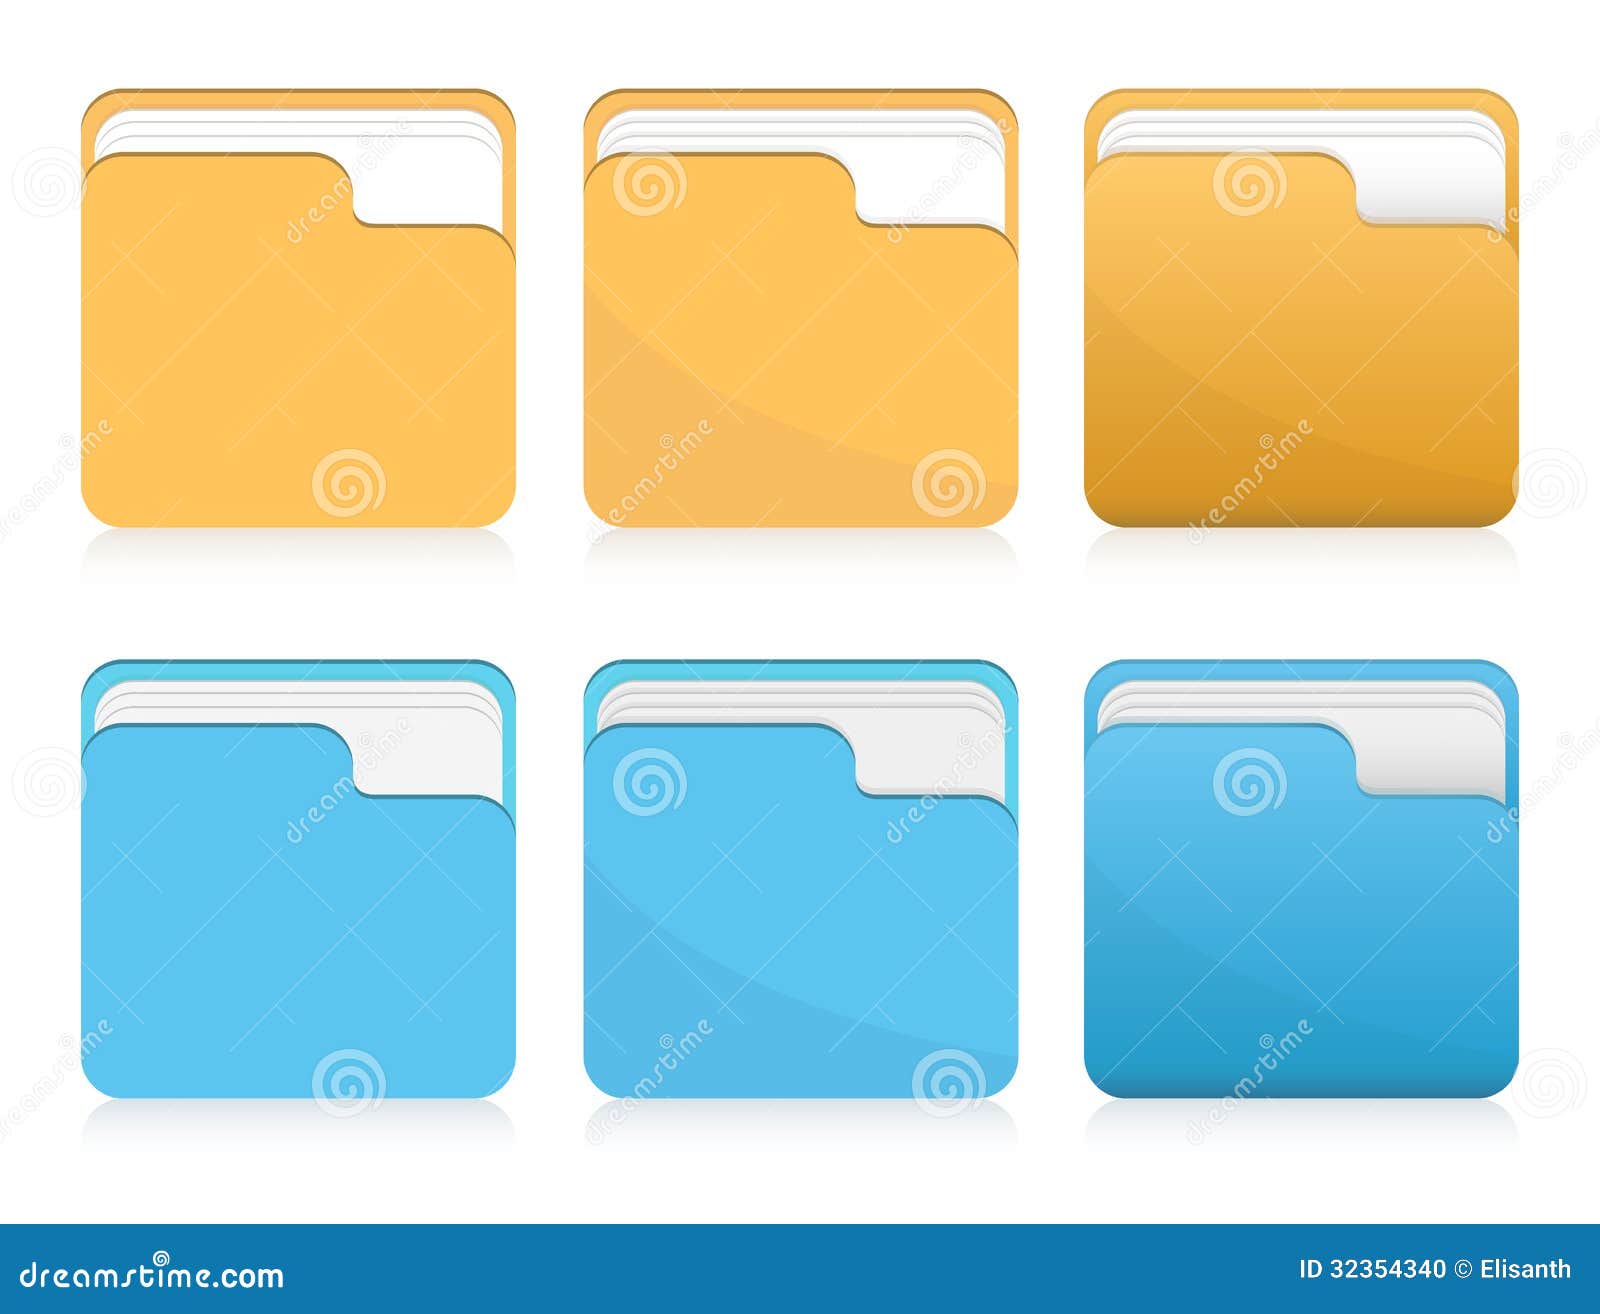 Vector Set Of Folder Icons Stock Photo Image 32354340